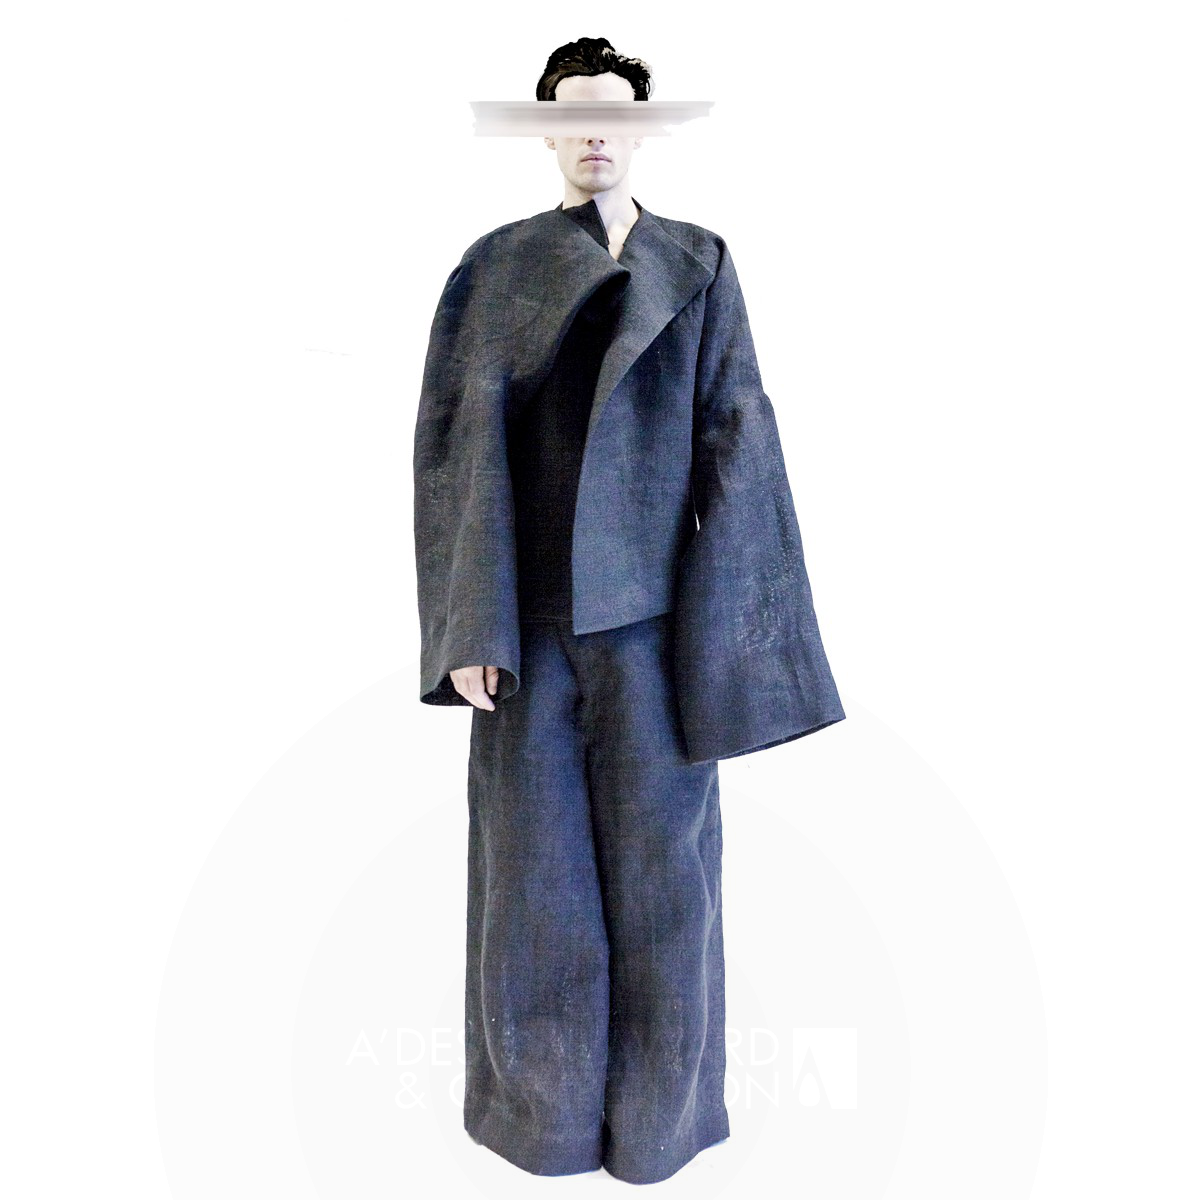 Woven Sculpture Menswear by CHIAYUN HU